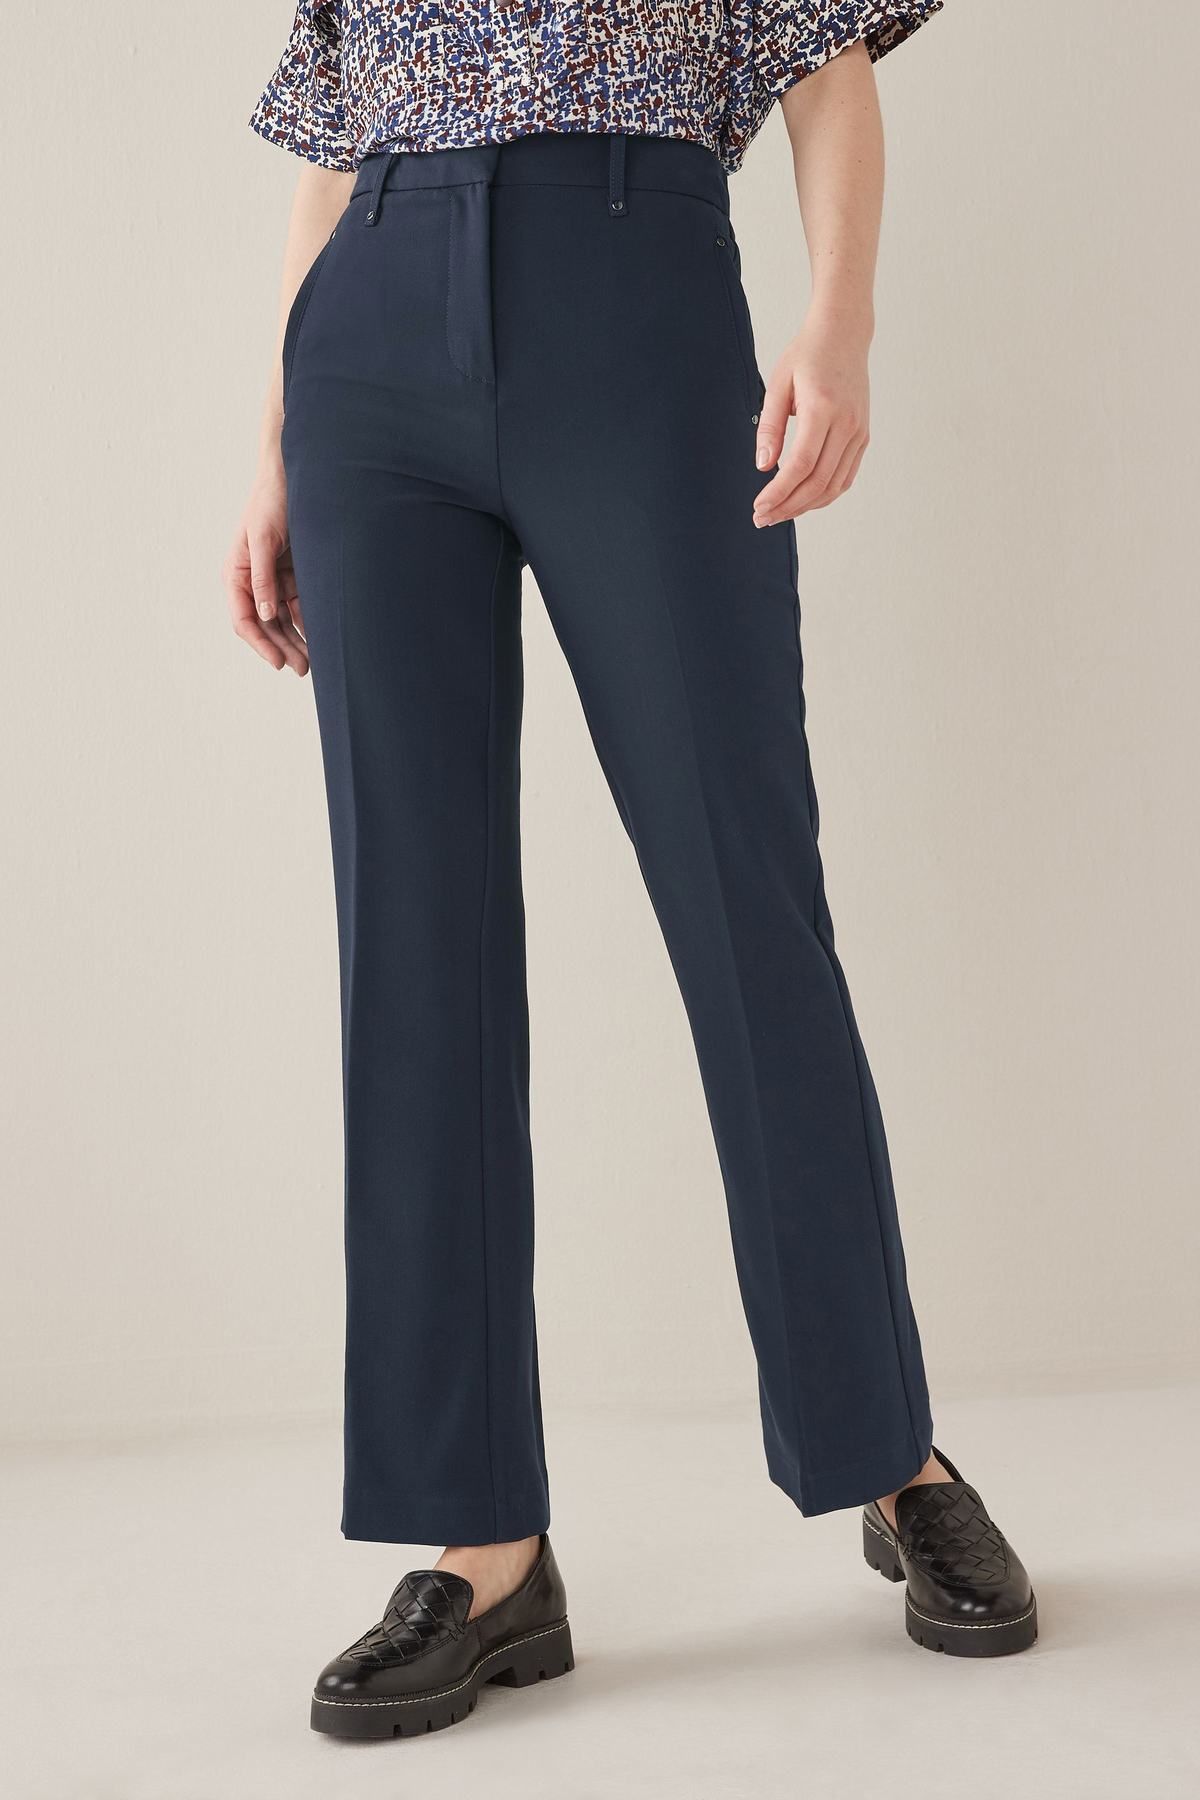 Buy Navy Trousers & Pants for Women by Sugathari Online | Ajio.com